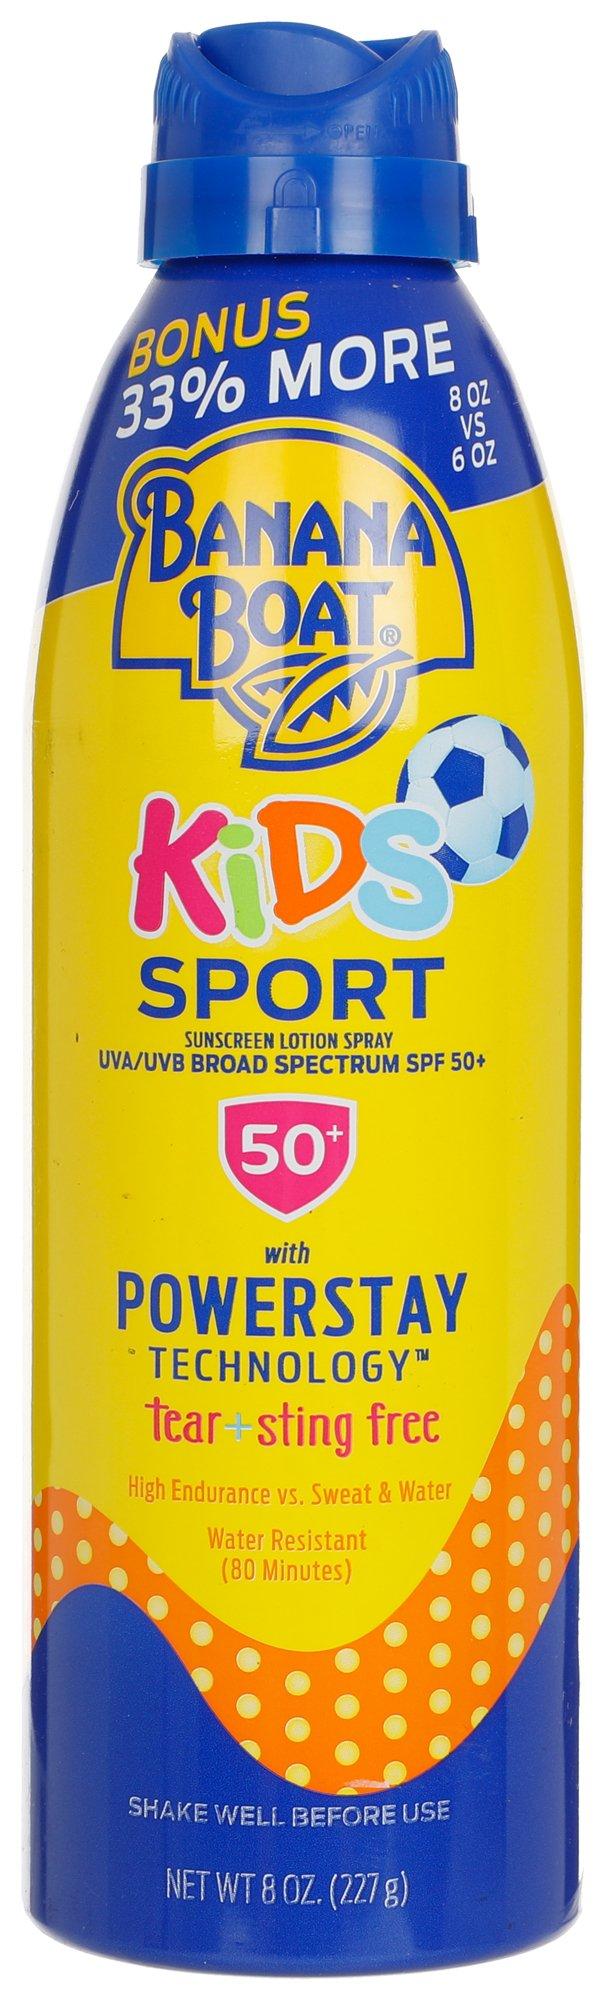 8 oz Kids Sport Sunscreen Lotion Spray